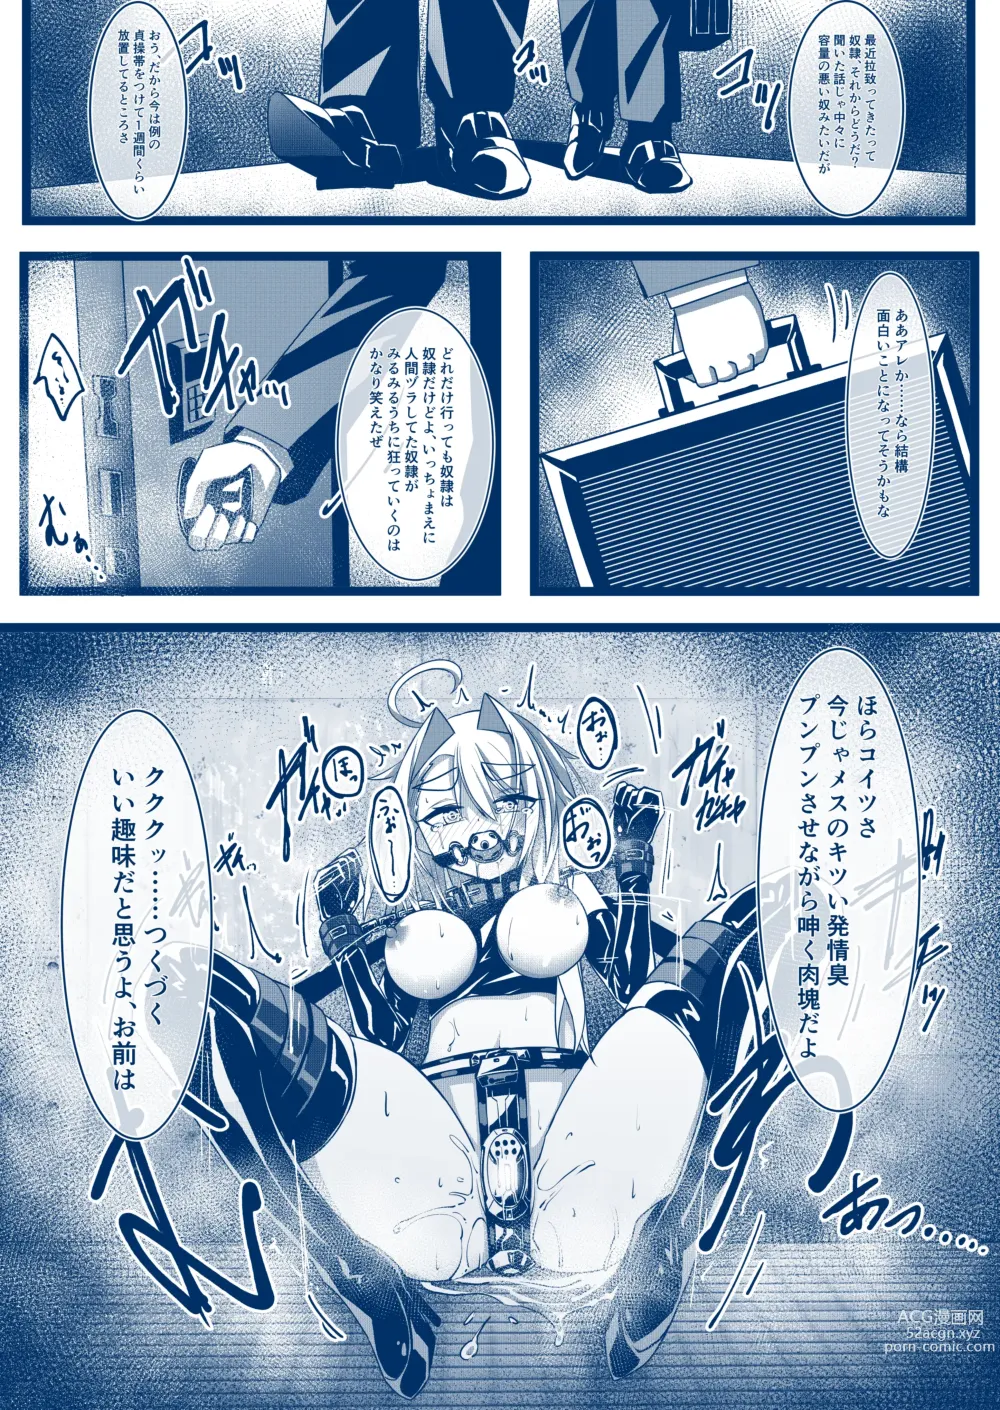 Page 1 of doujinshi Umanosuke-chan Teisoutai Zetchou Kinshi Manga Shinchoku Dankai